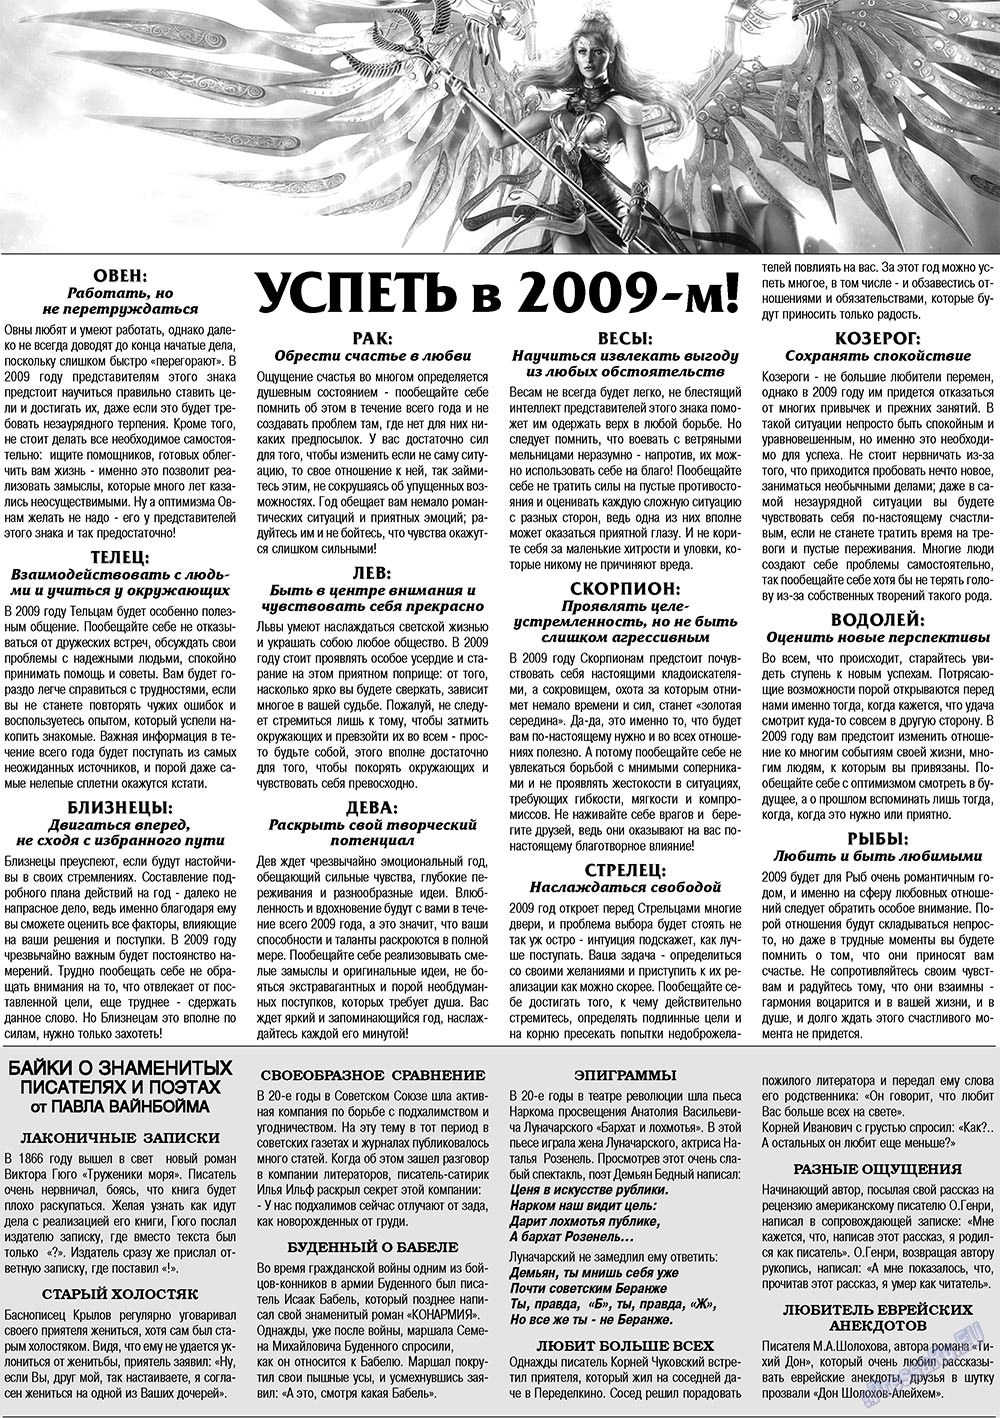 Кругозор плюс! (газета). 2009 год, номер 4, стр. 47